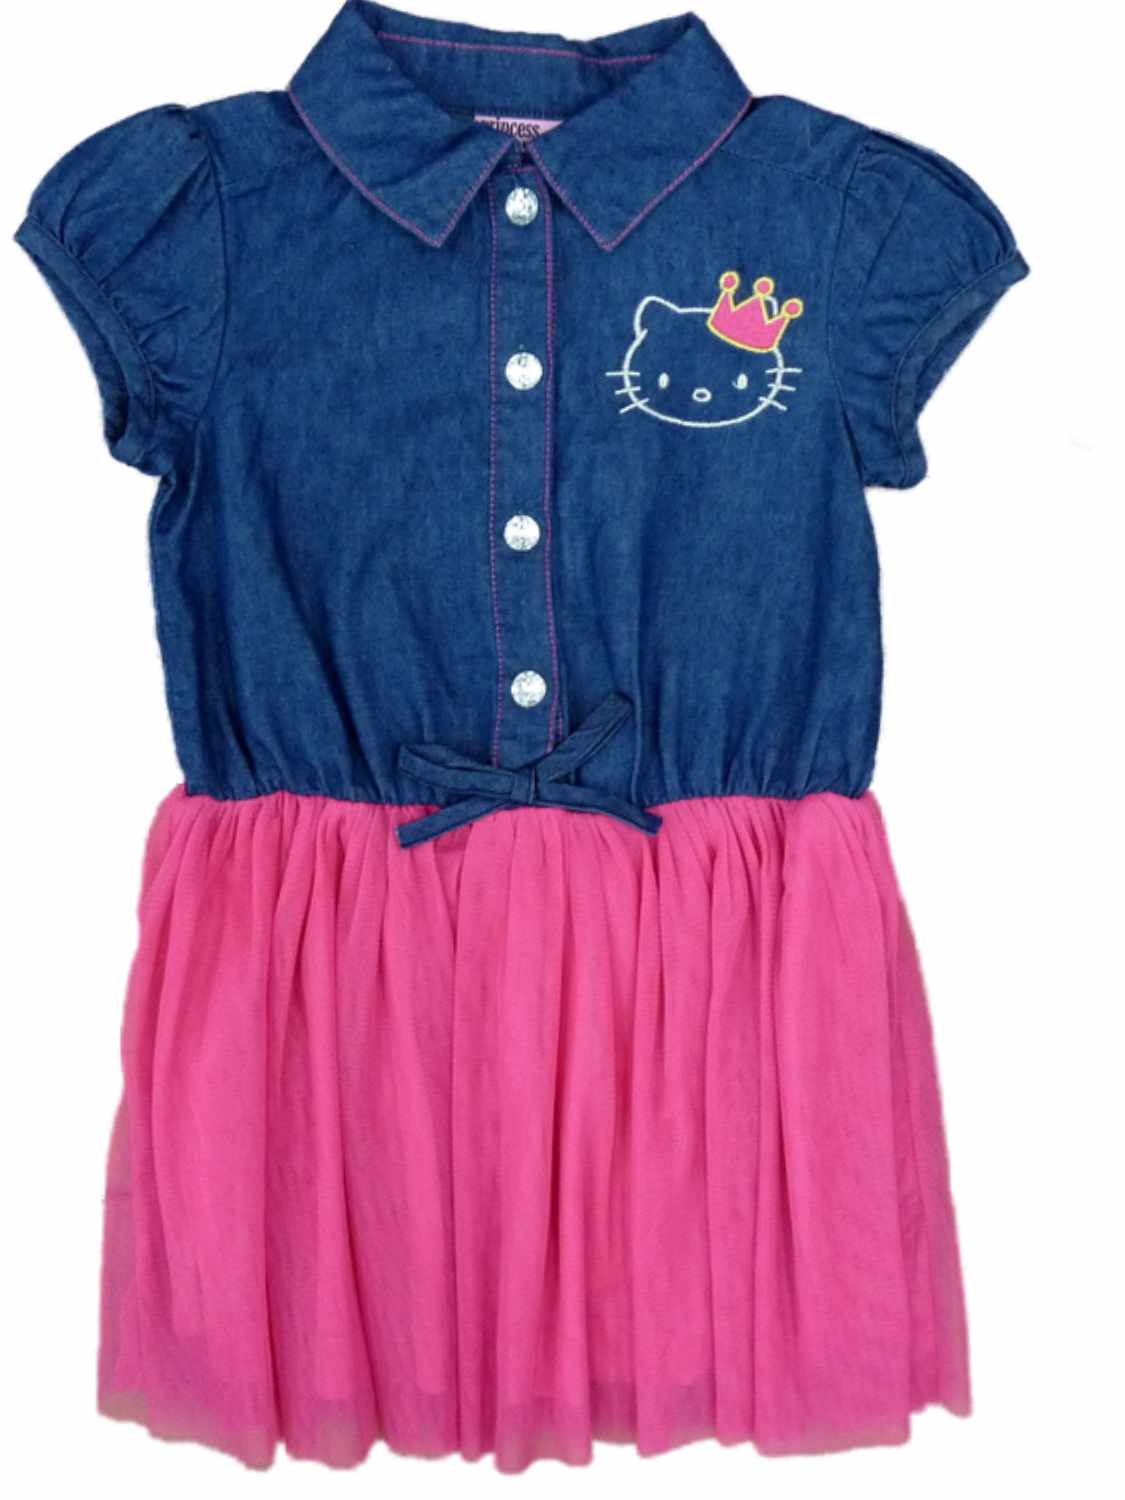 Hello Kitty Toddler & Girls Princess Denim & Pink Tulle Short Sleeve Dress 2T - image 1 of 1